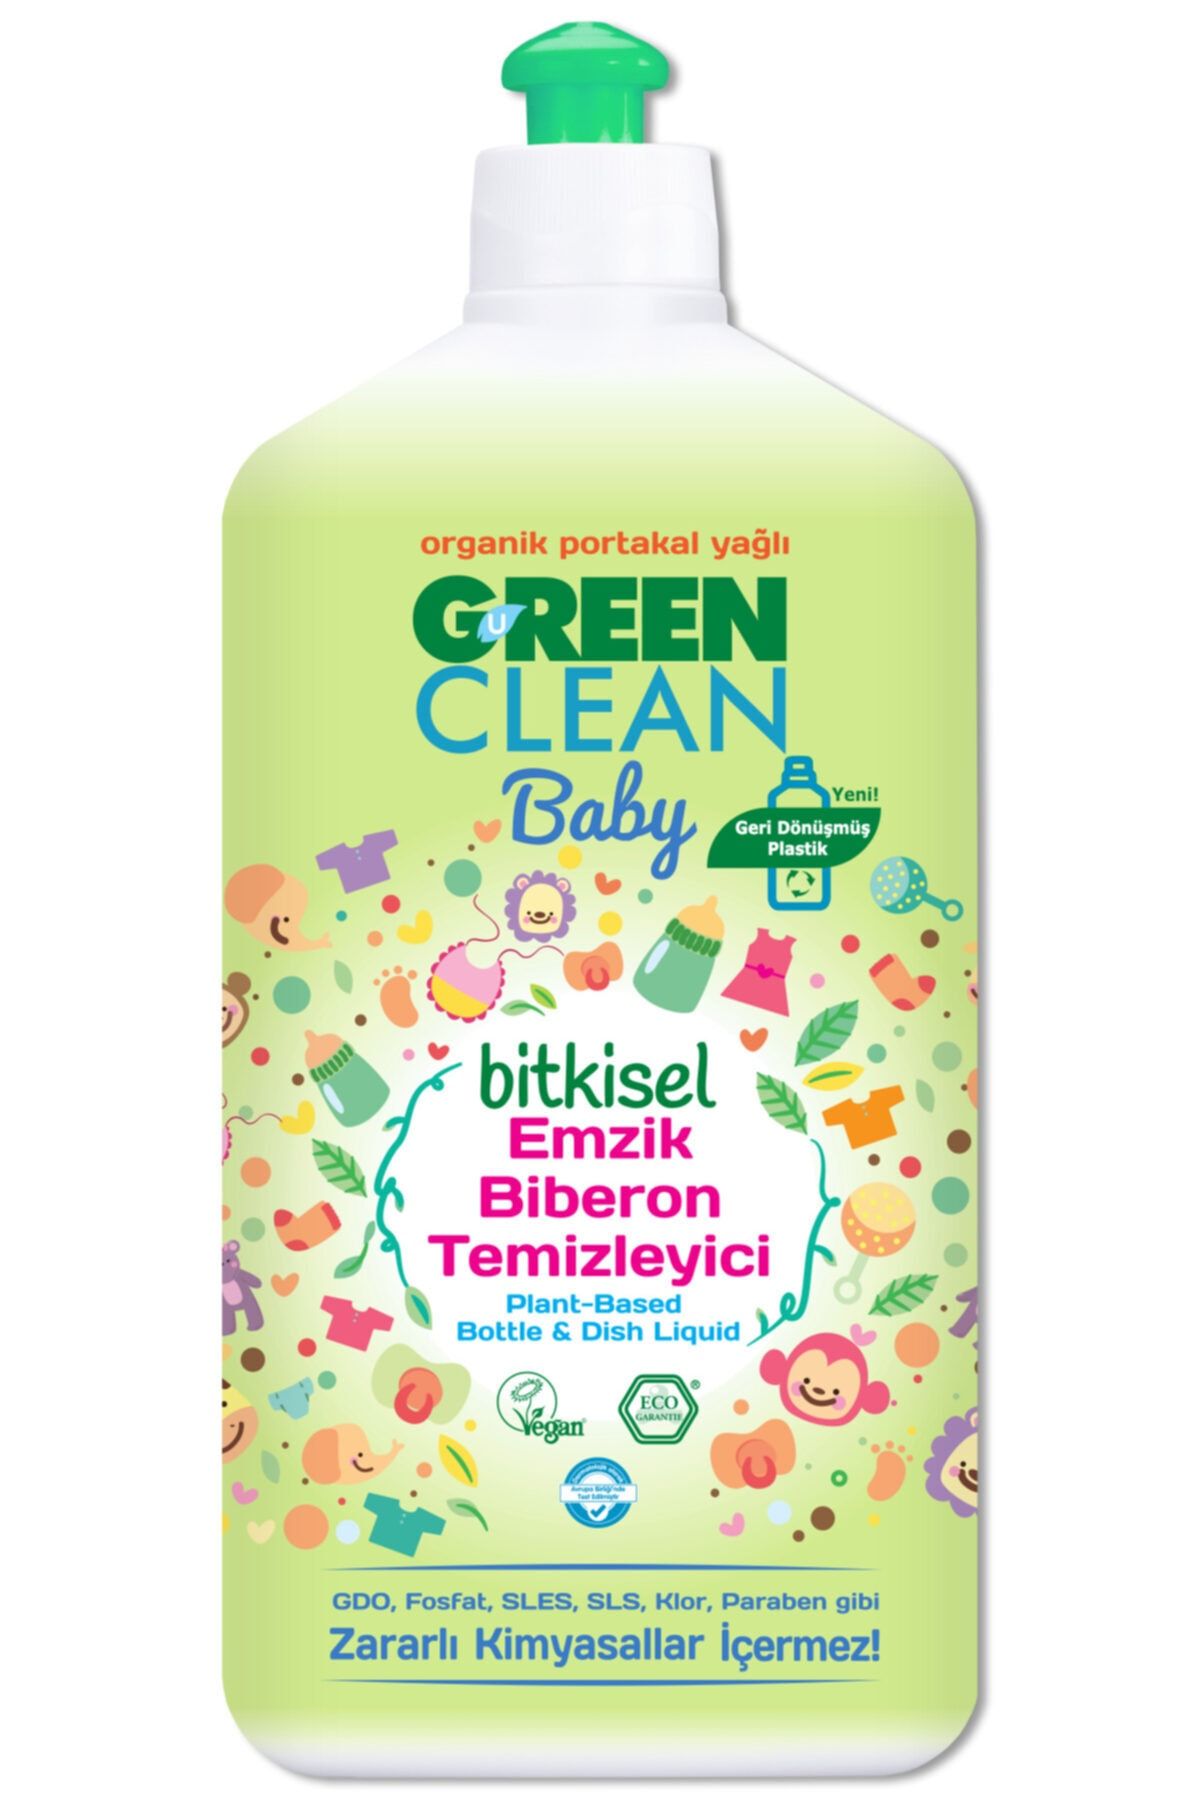 Green Clean Baby Bitkisel Emzik Biberon Temizleyici 500 ml